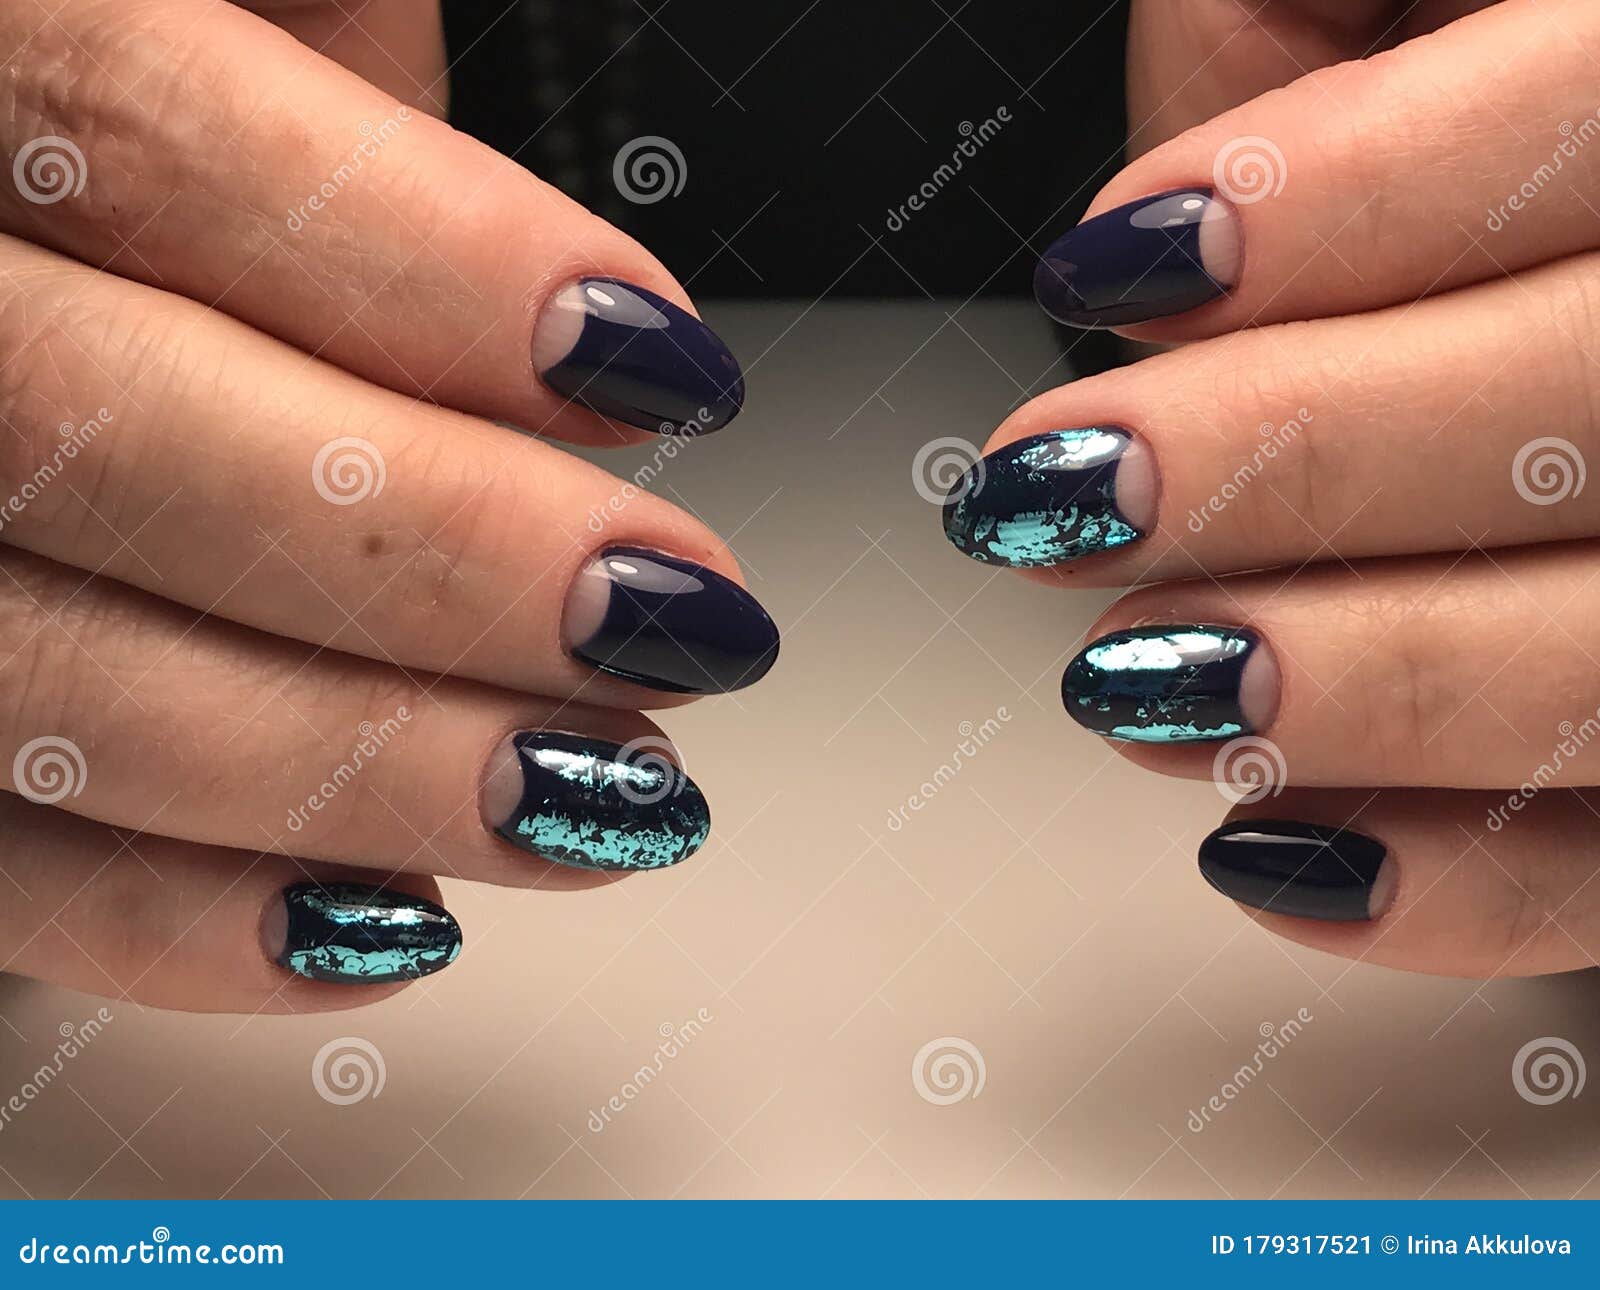 5. Metallic Blue and Black Geometric Nail Art - wide 2